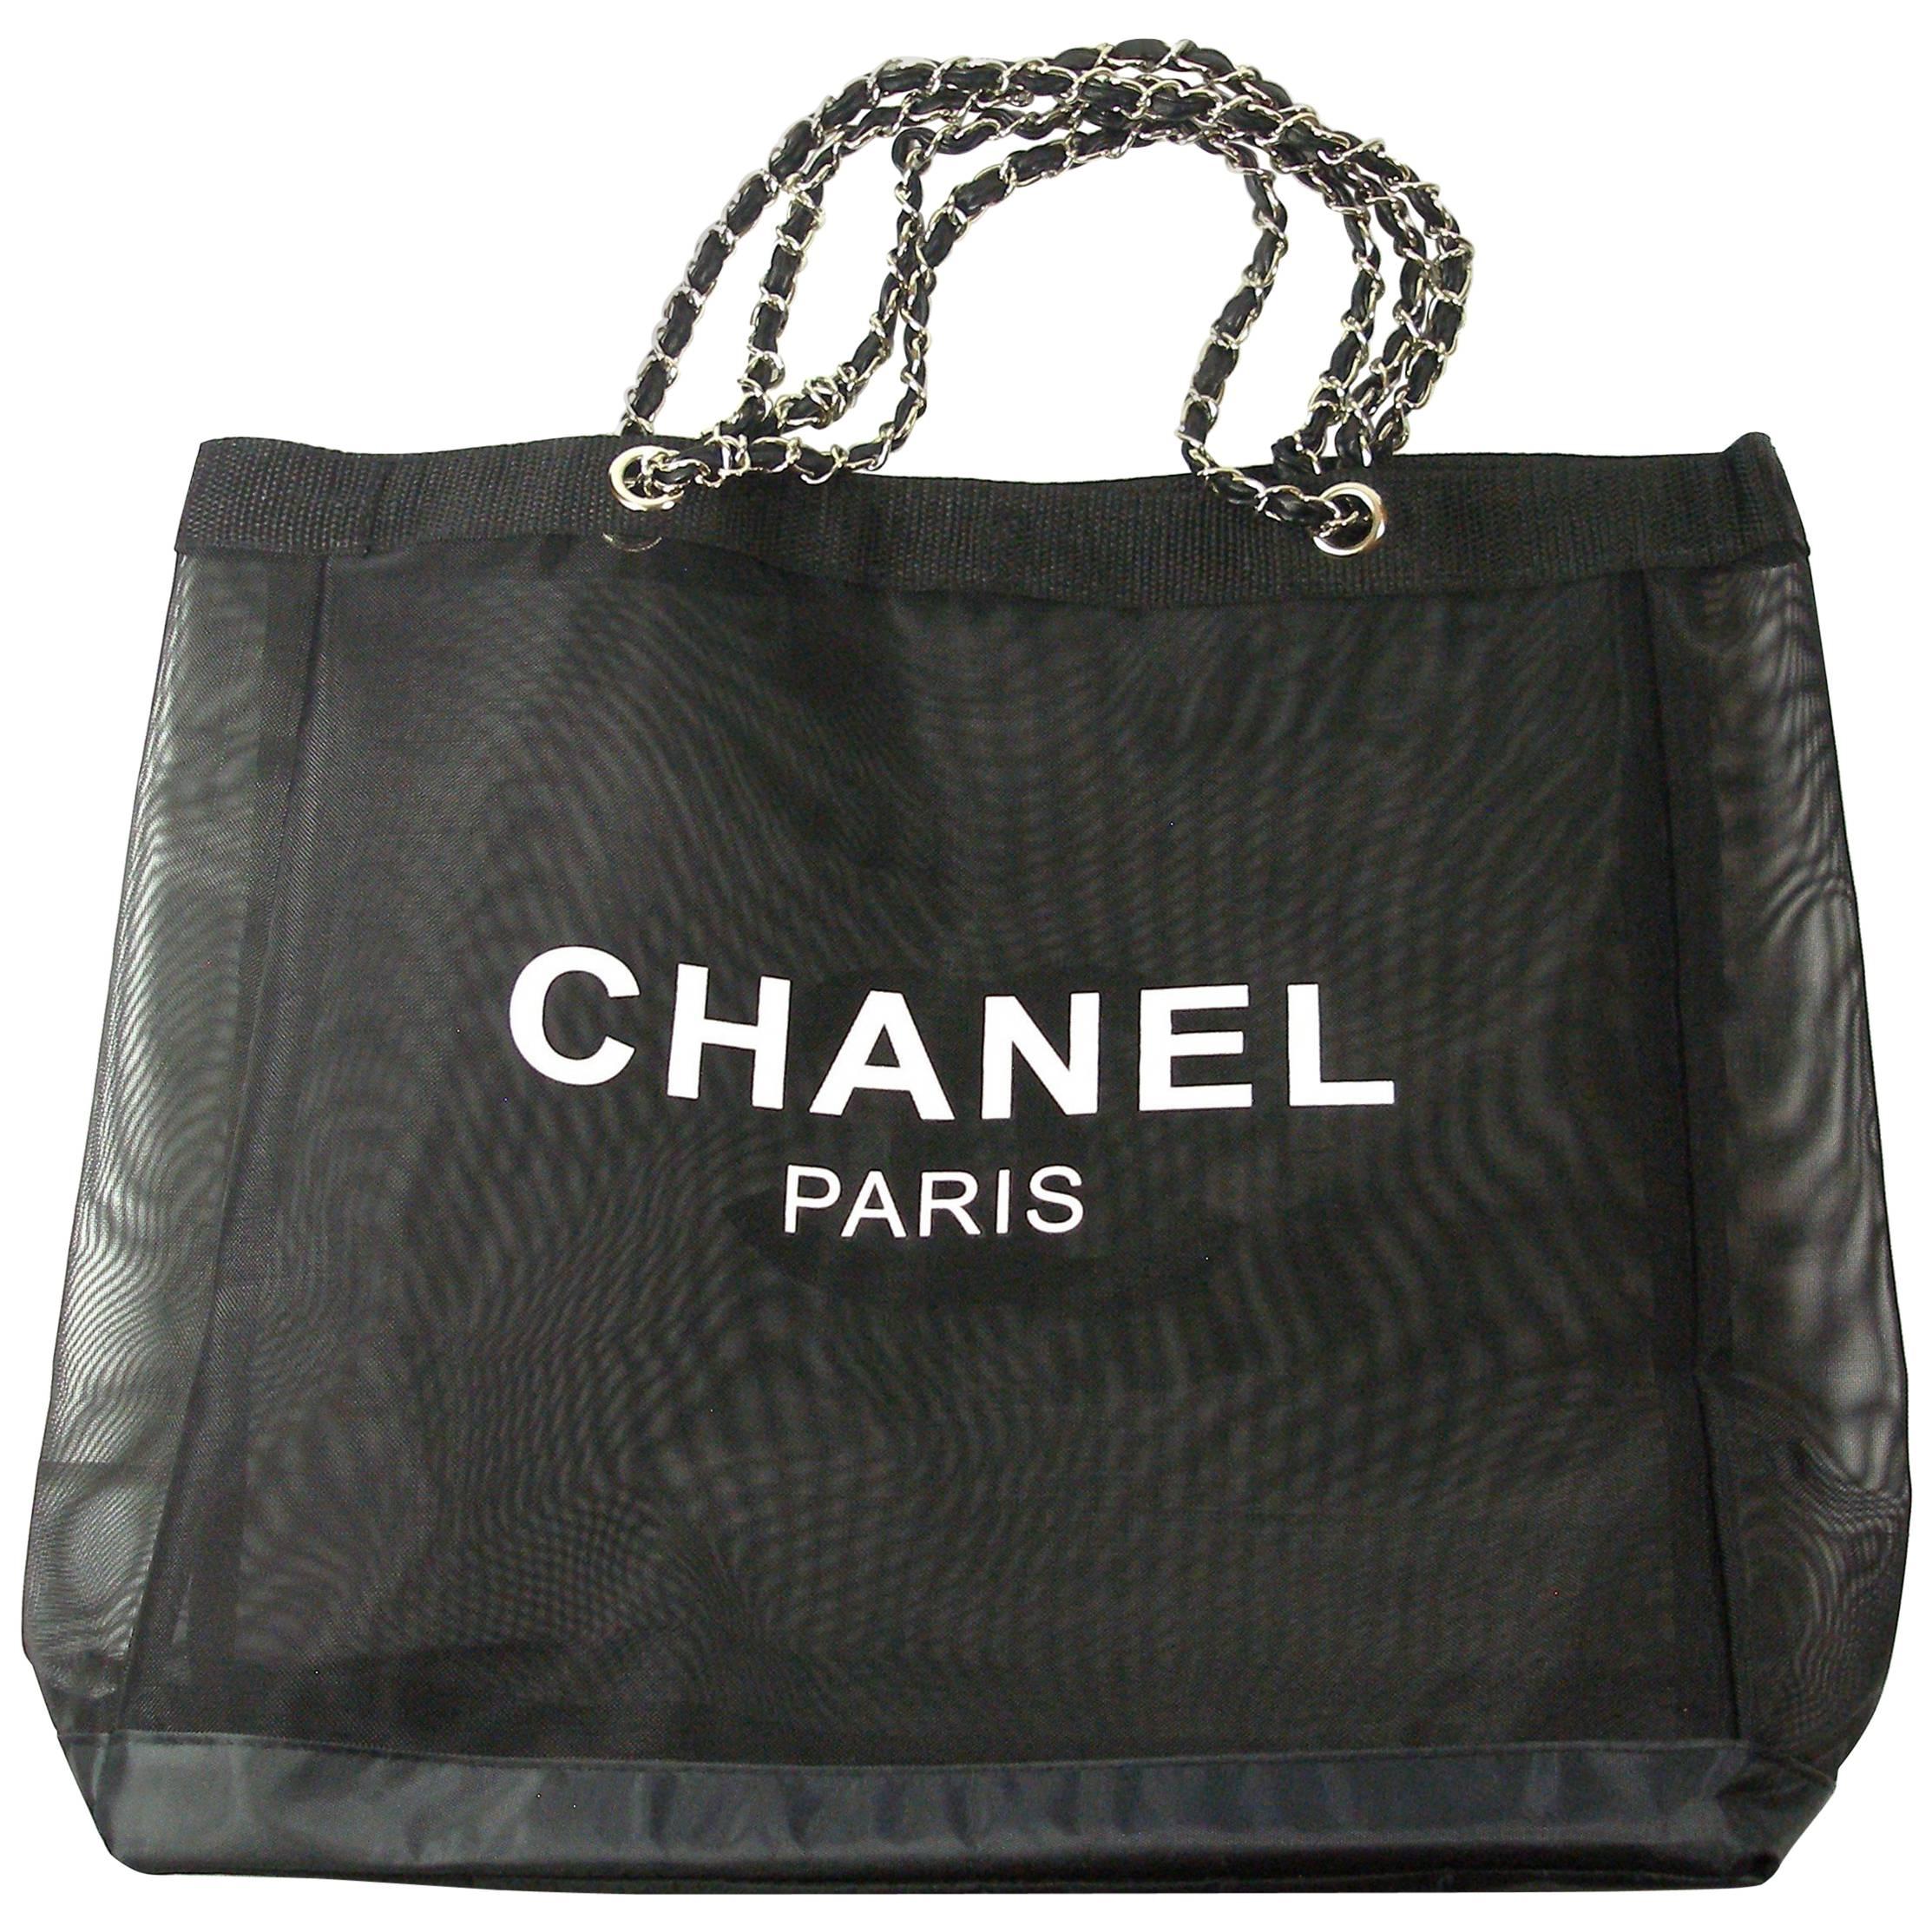 CHANEL VIP Black Mesh Tote Bag Shopping Travel SHOPPER / BRAND NEW 